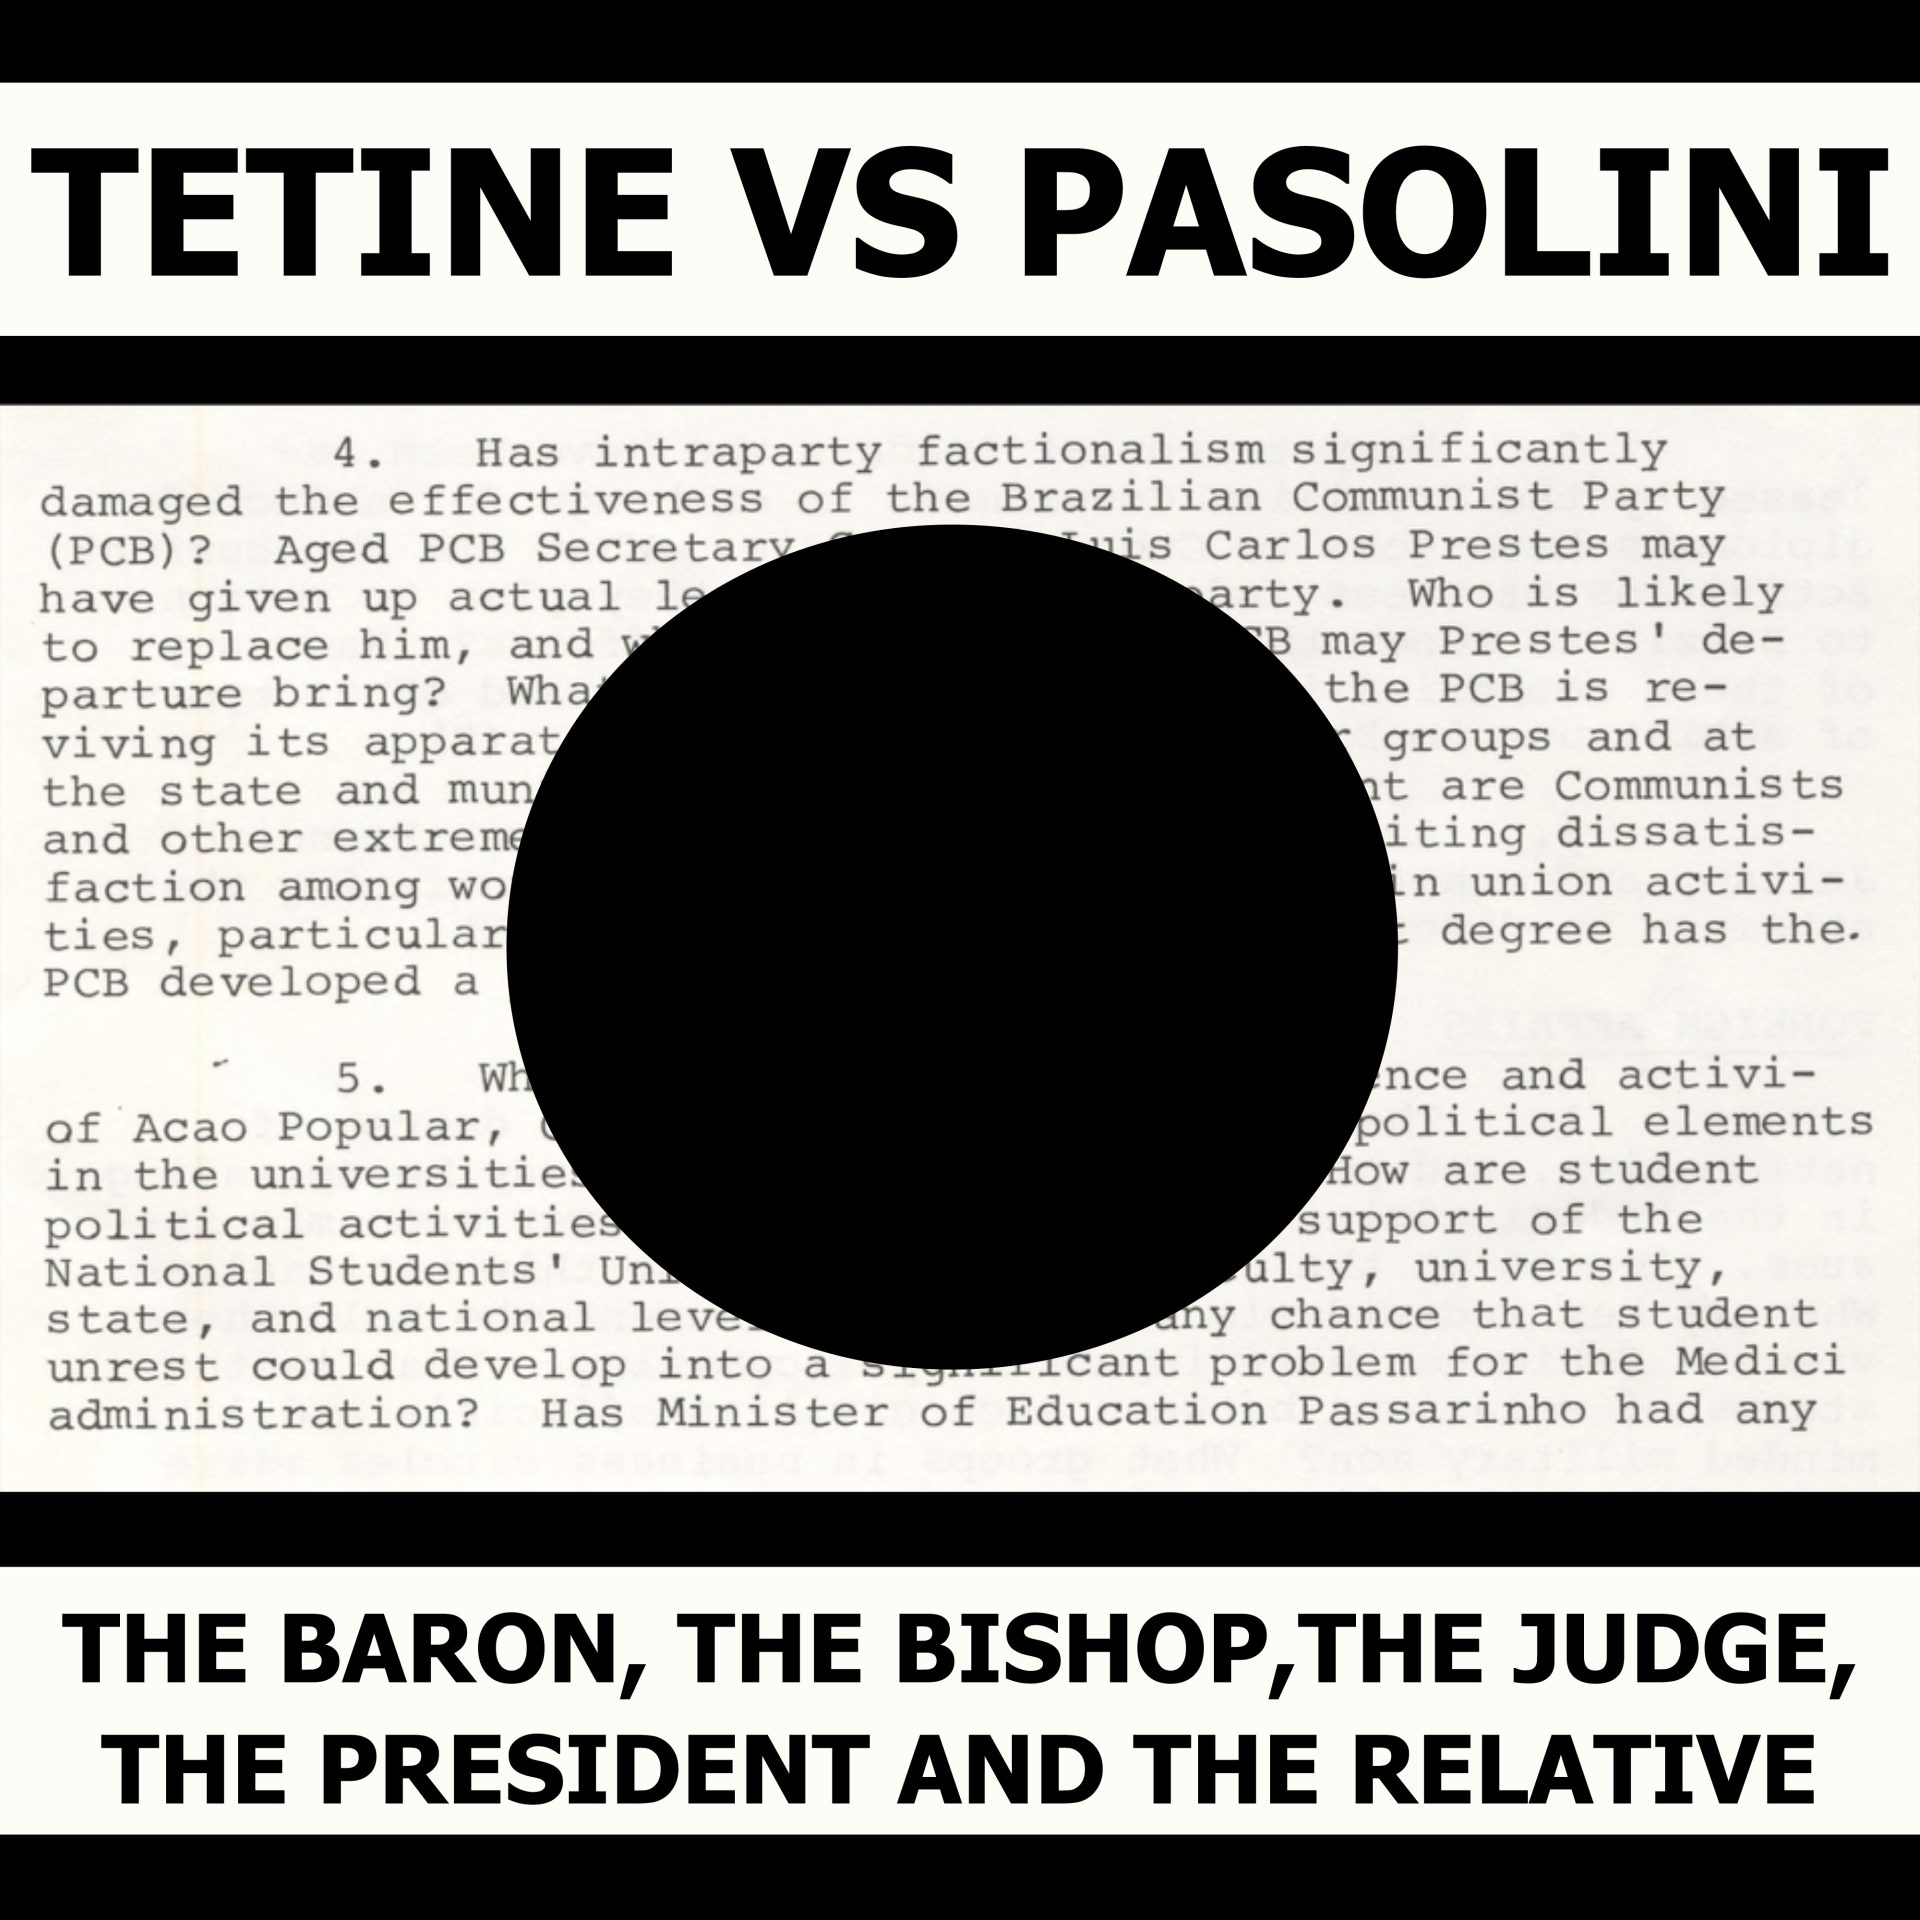 "Tetine vs Pasolini" (2019), da dupla Tetine